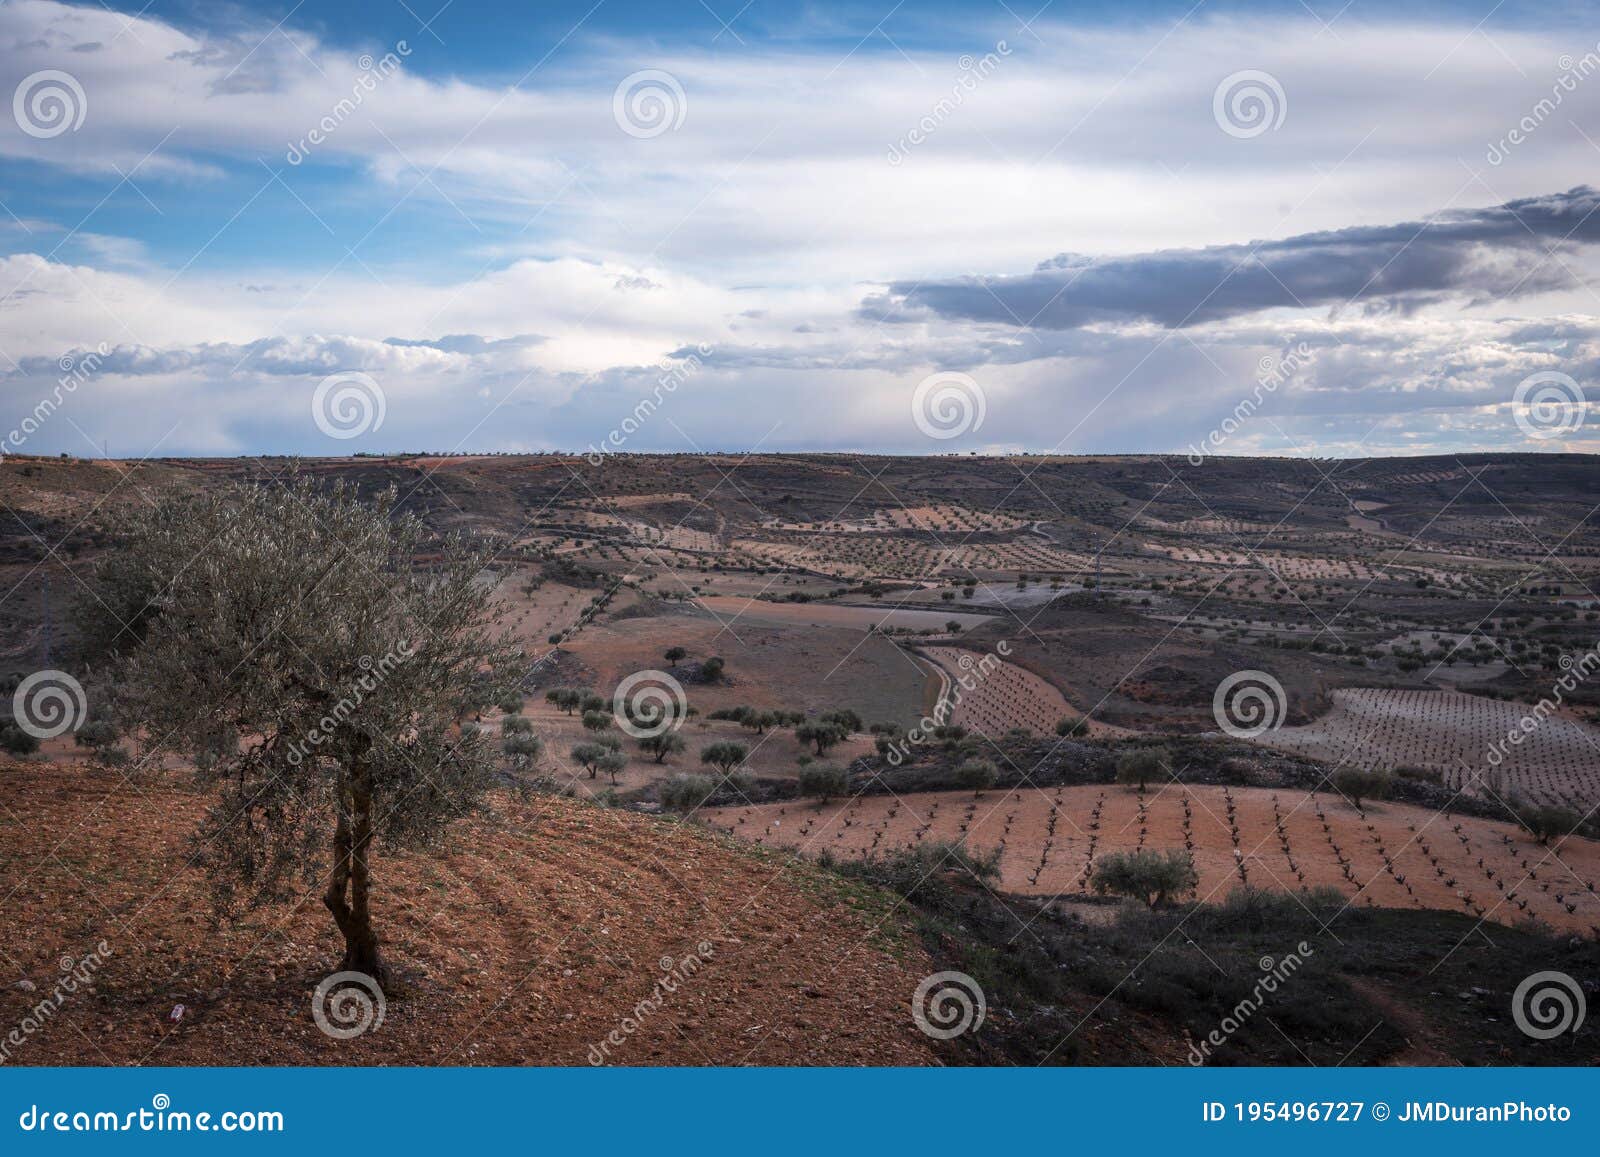 olive fields in colmenar de oreja under a blue sky with clouds, spain